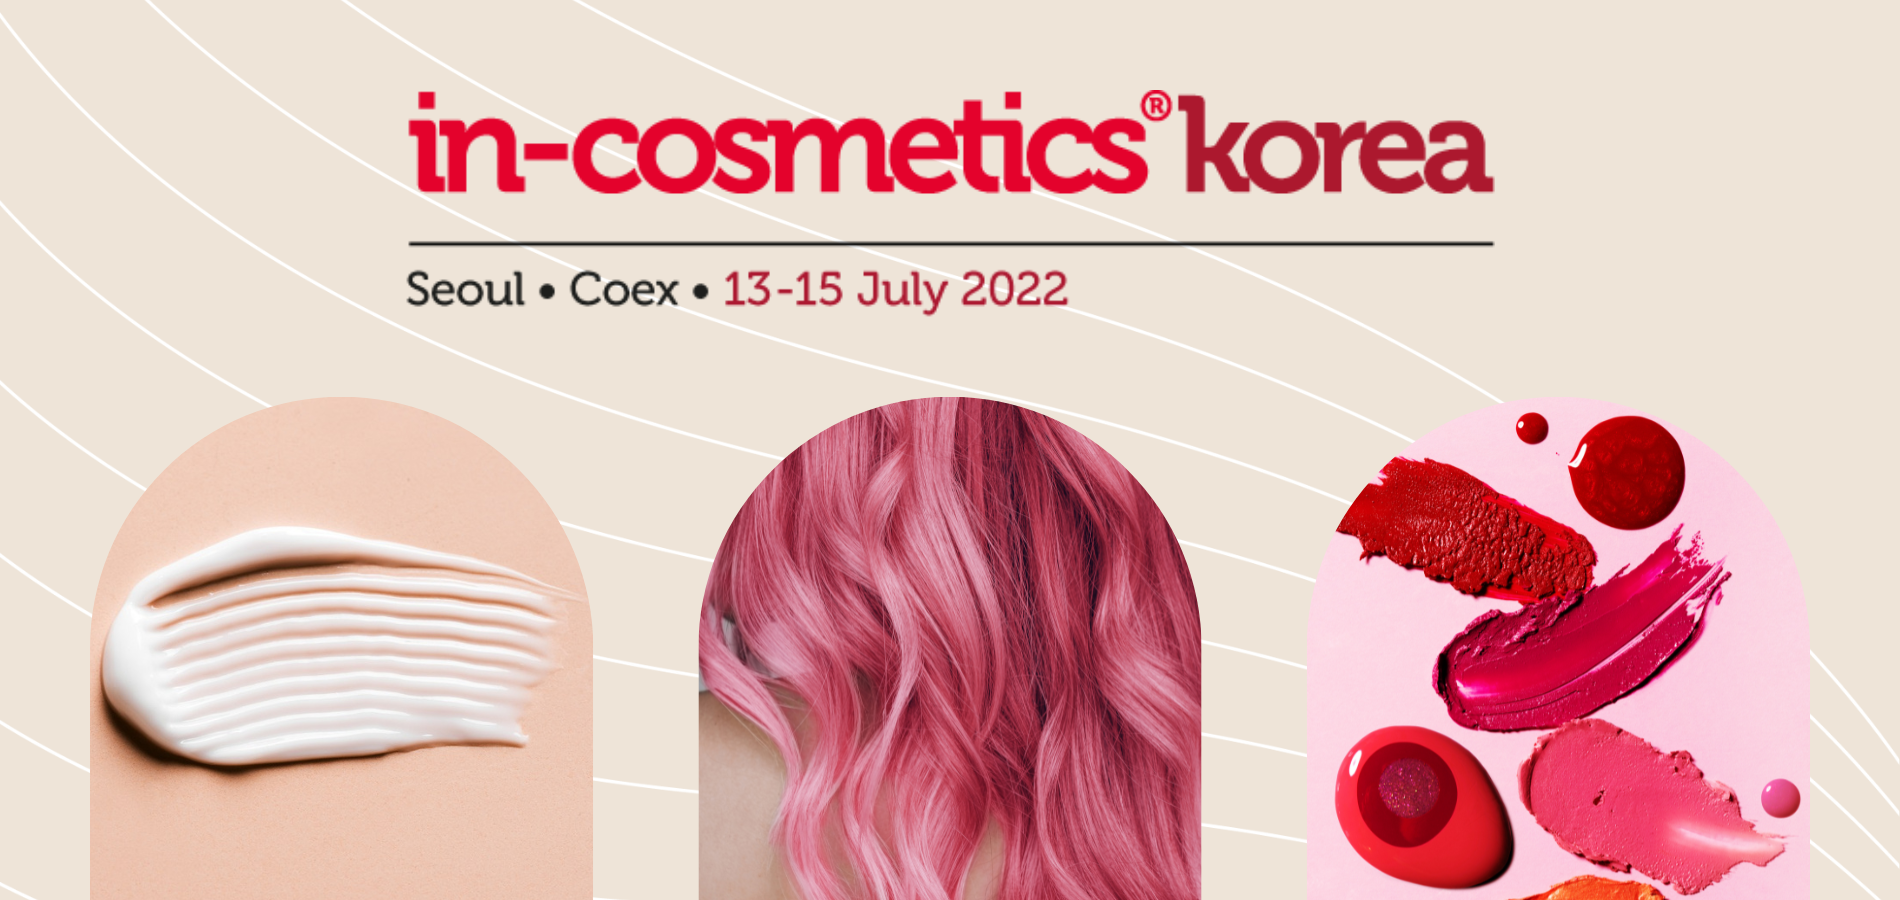 In-Cosmetic Korea 2022 Website Featured Image